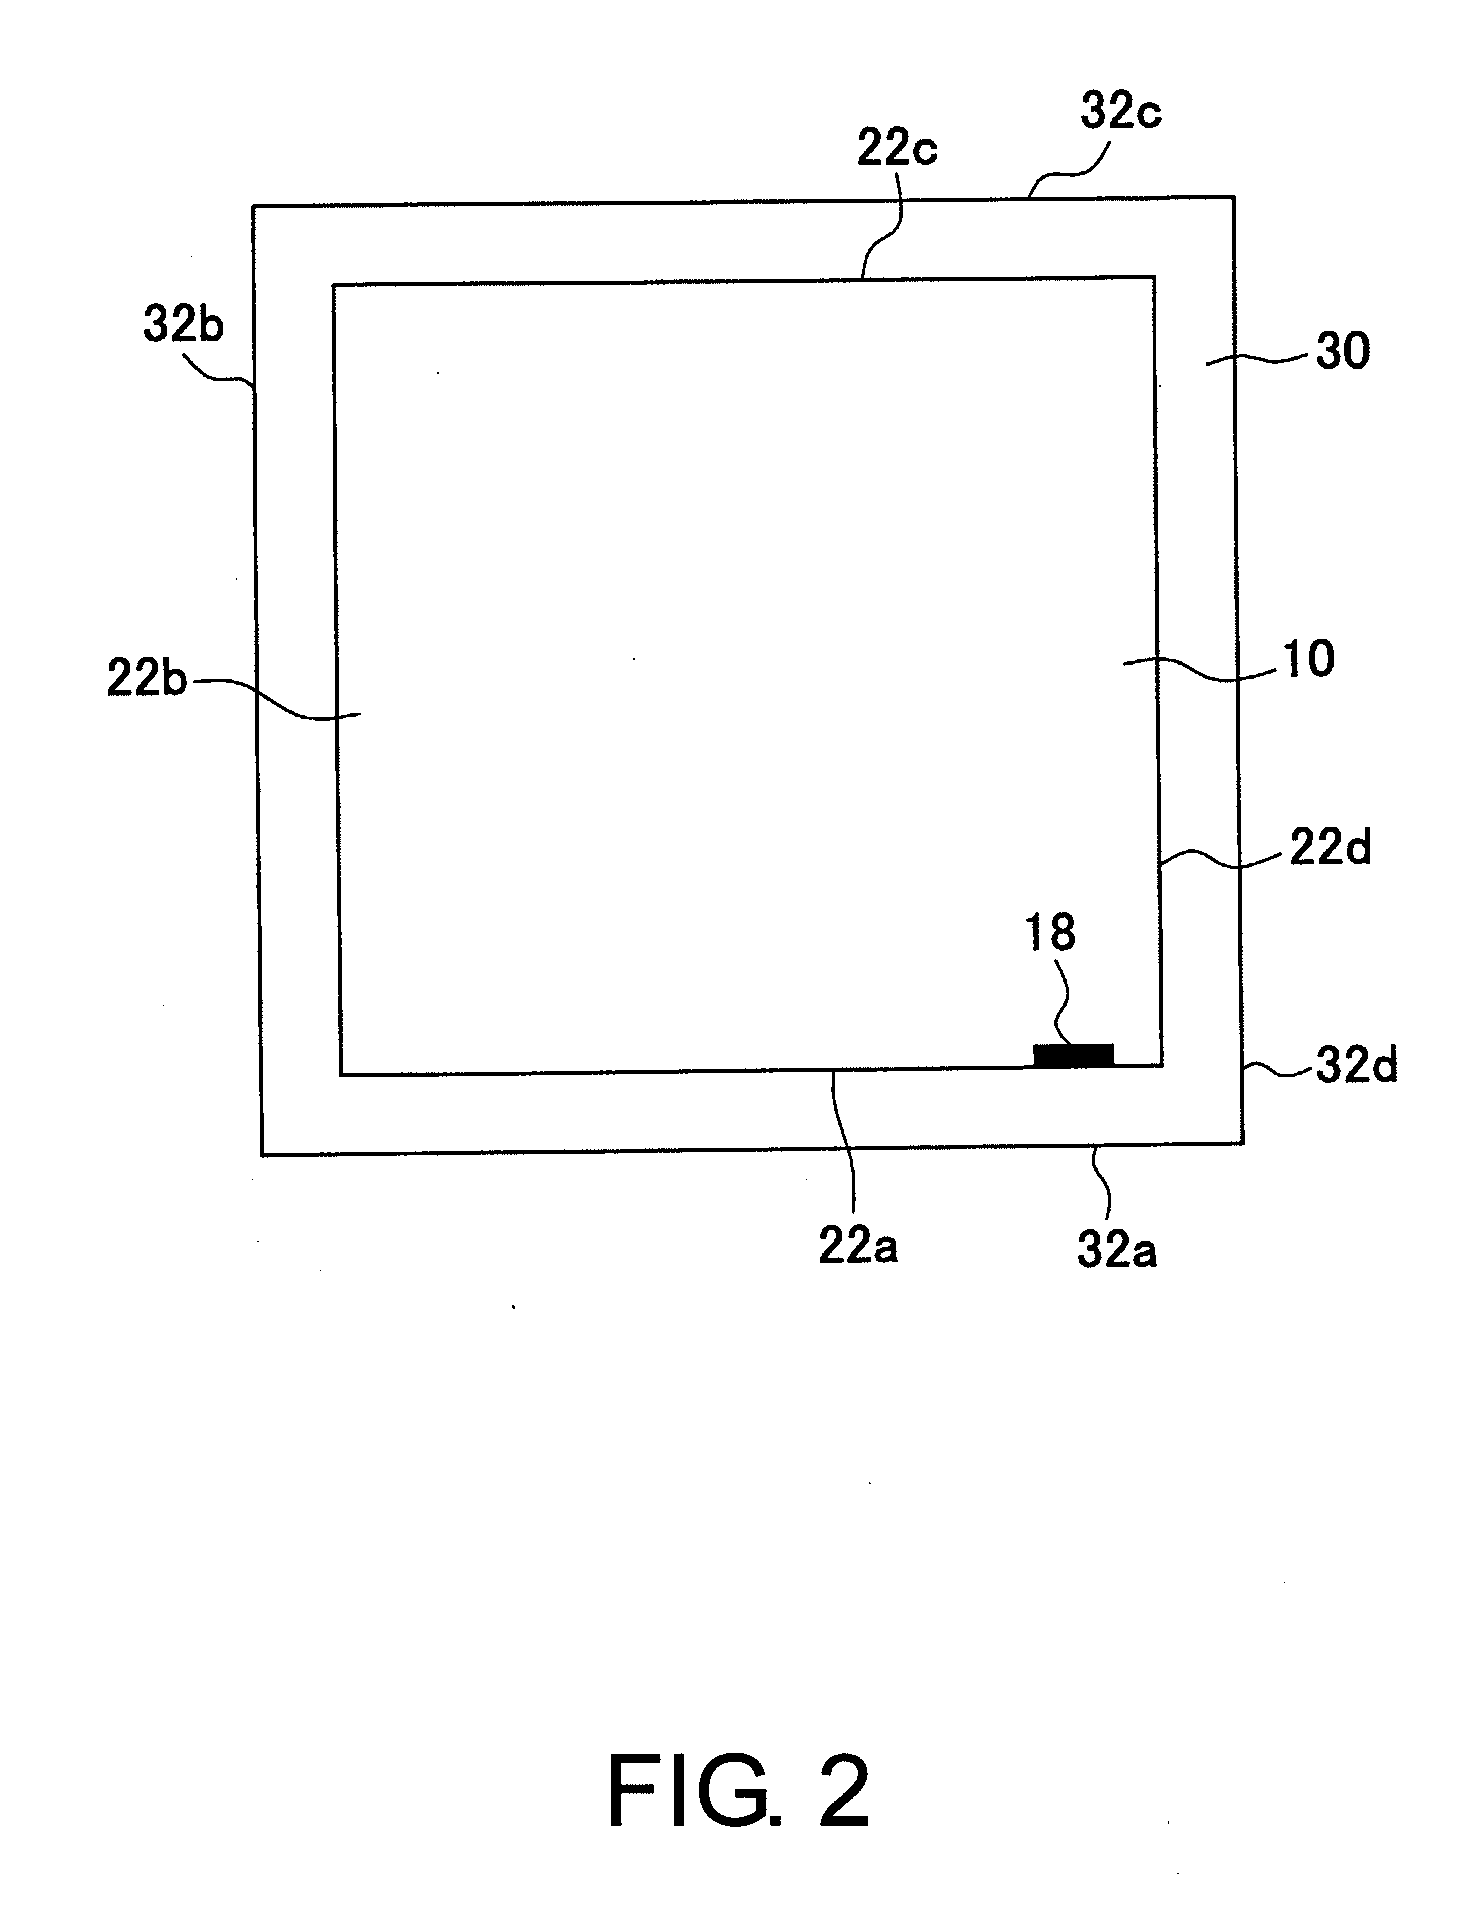 Photomask manufacturing method